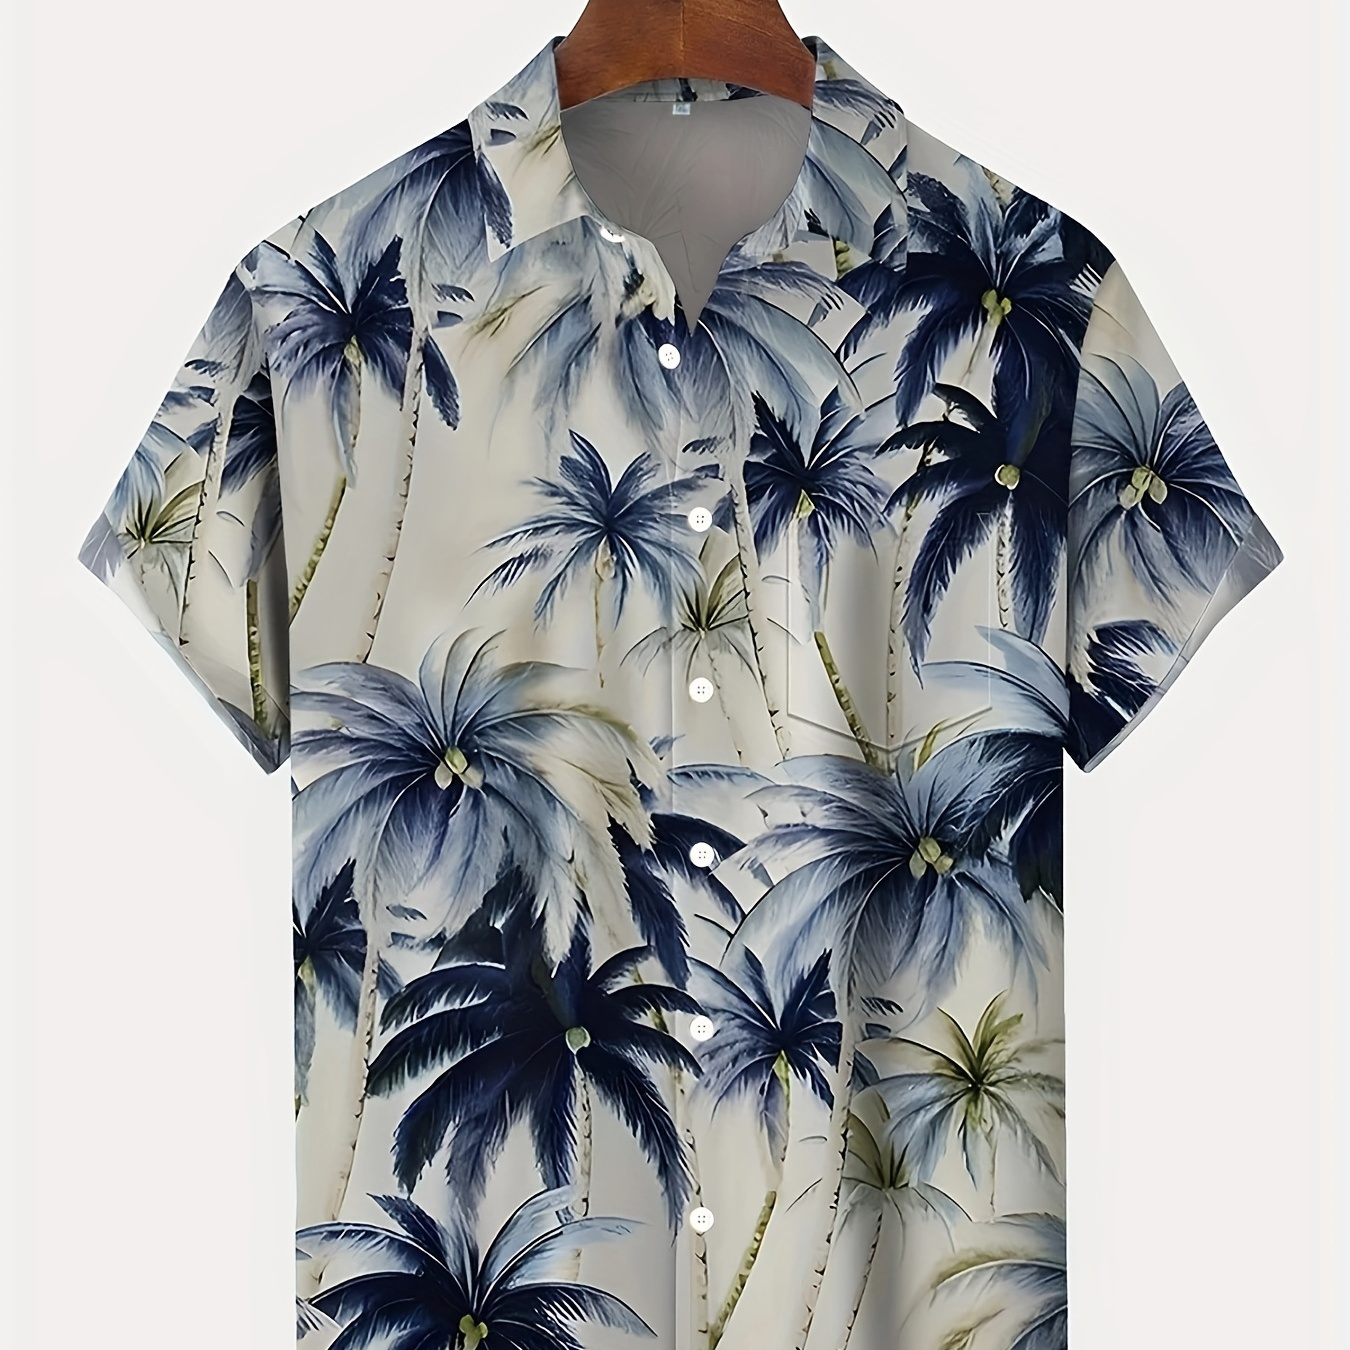 

Plus Size Men's Vintage Style Shirt Coconut Trees Print Short Sleeve Shirt For Summer, Men's Clothing